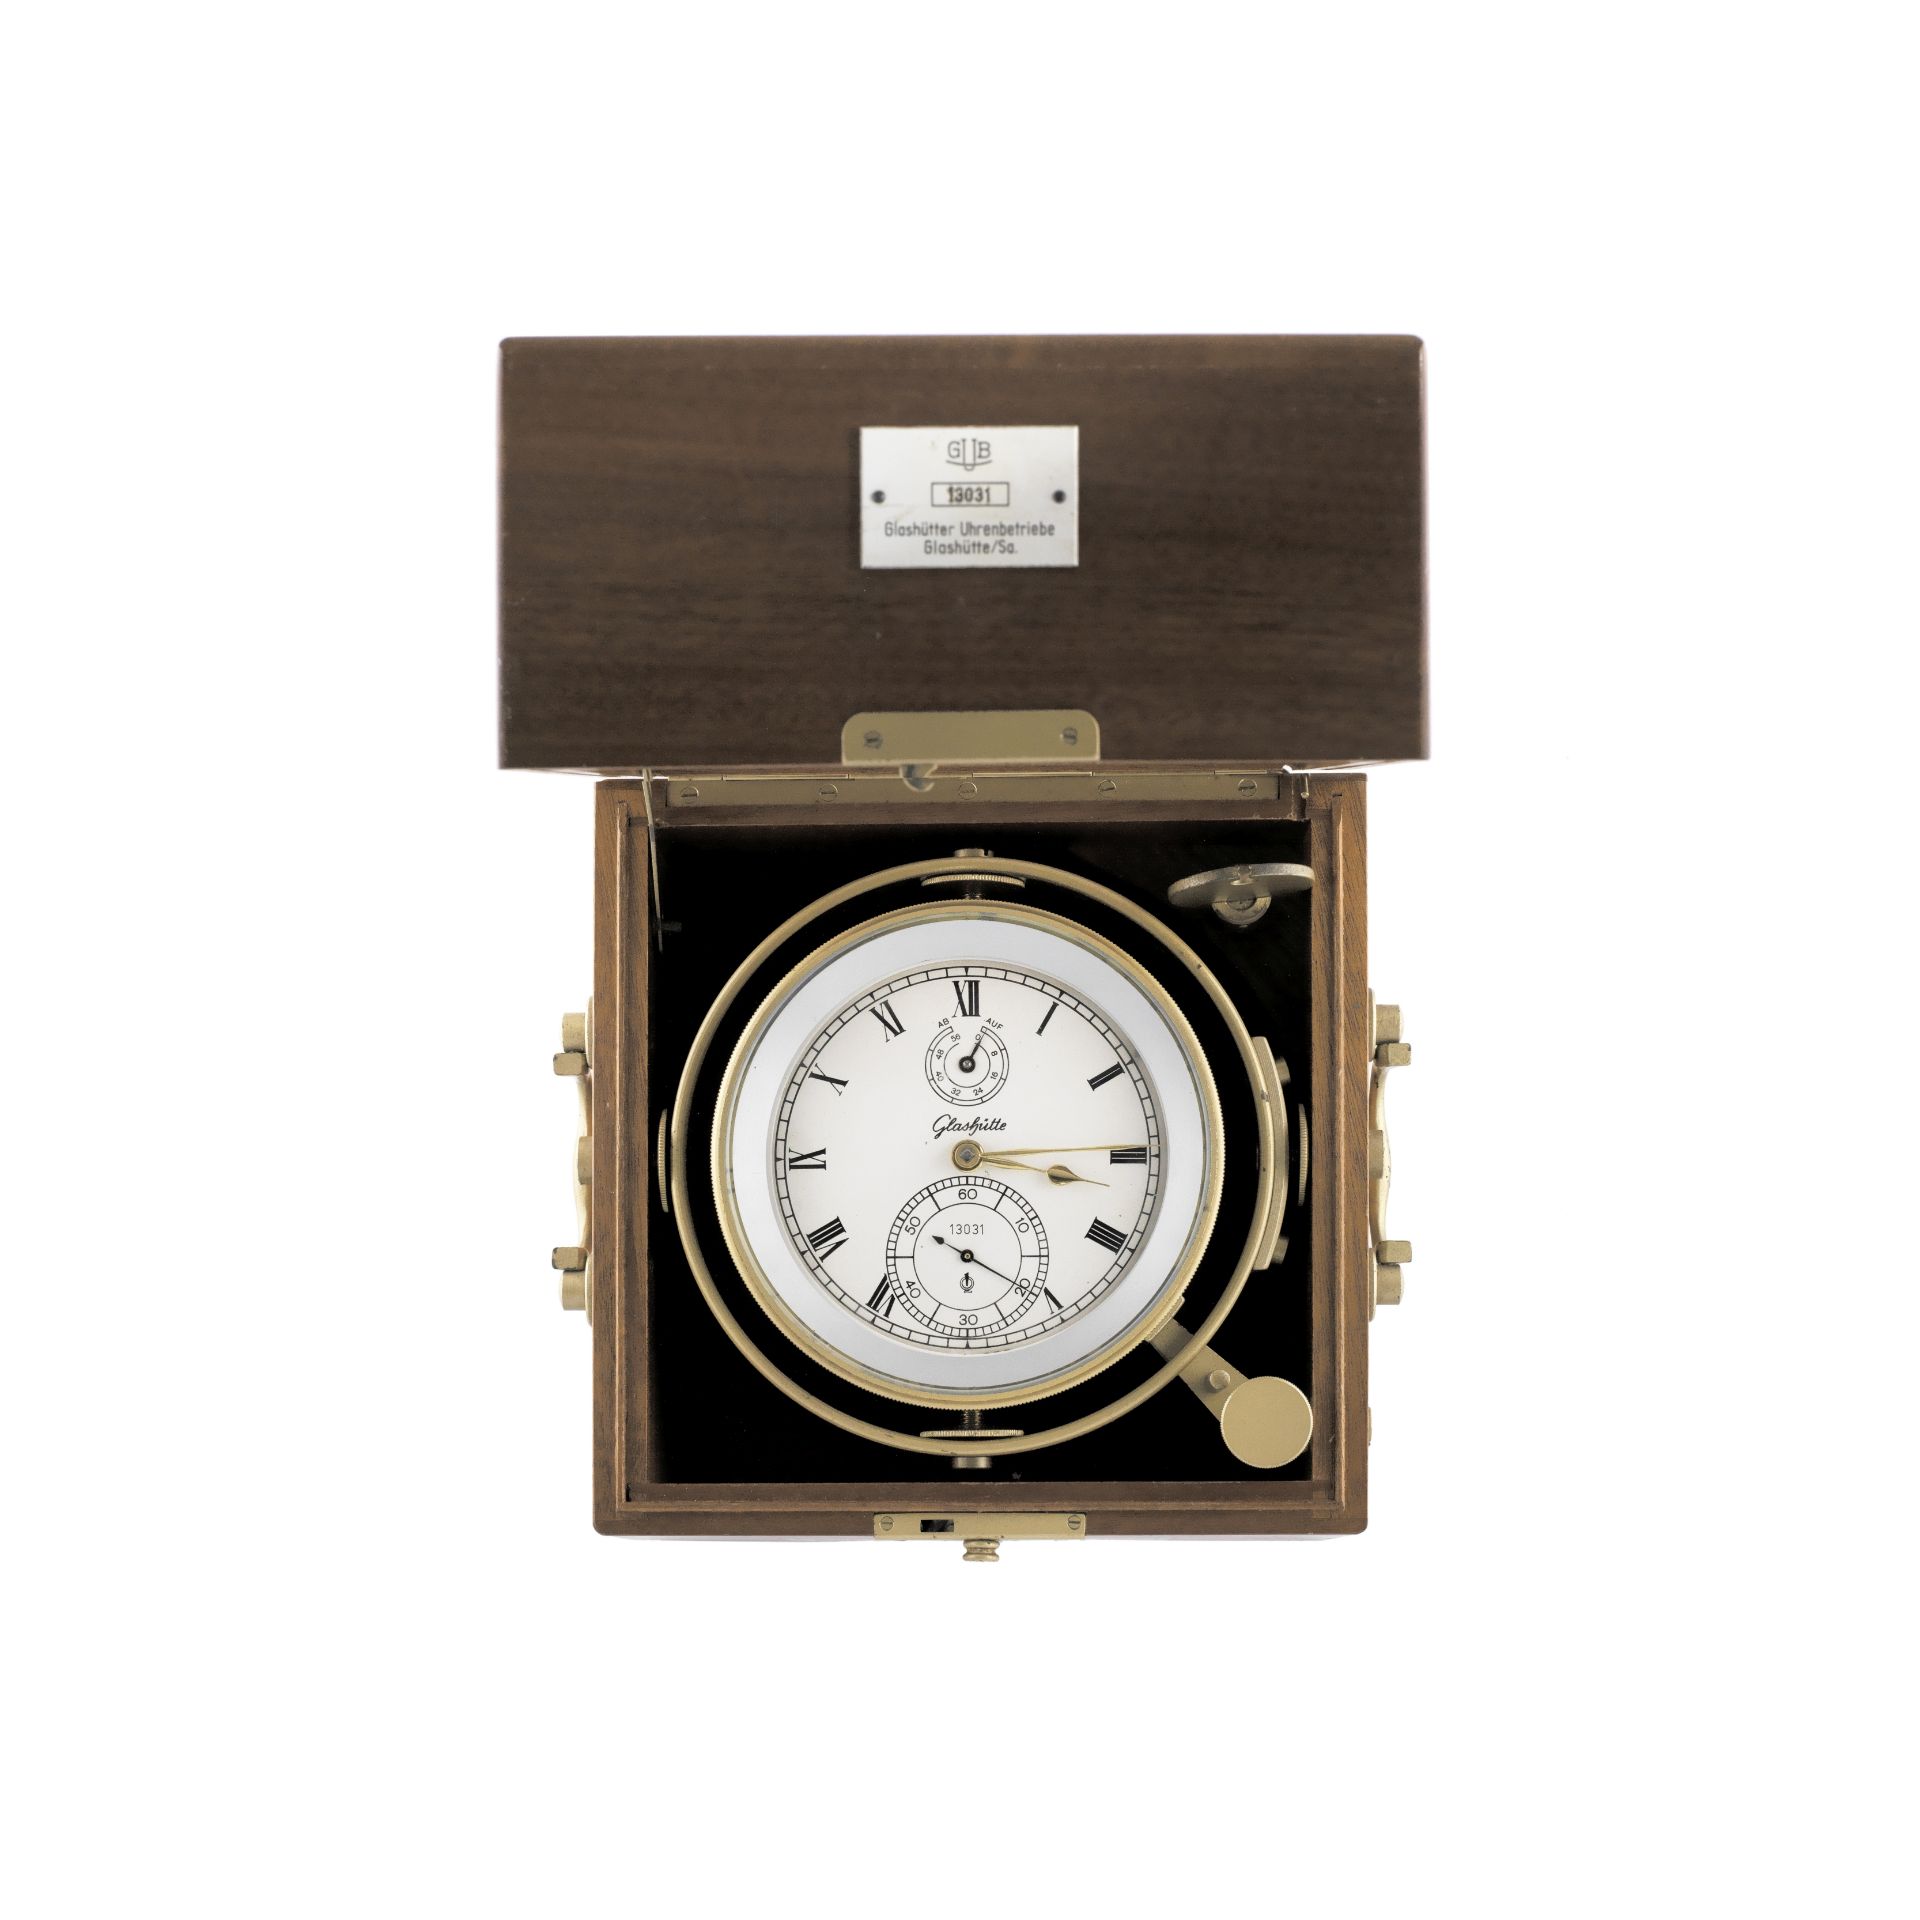 GUB Glashütte. A brass cased marine deck chronometer gimbal mounted in a wooden deck box Circa 1960